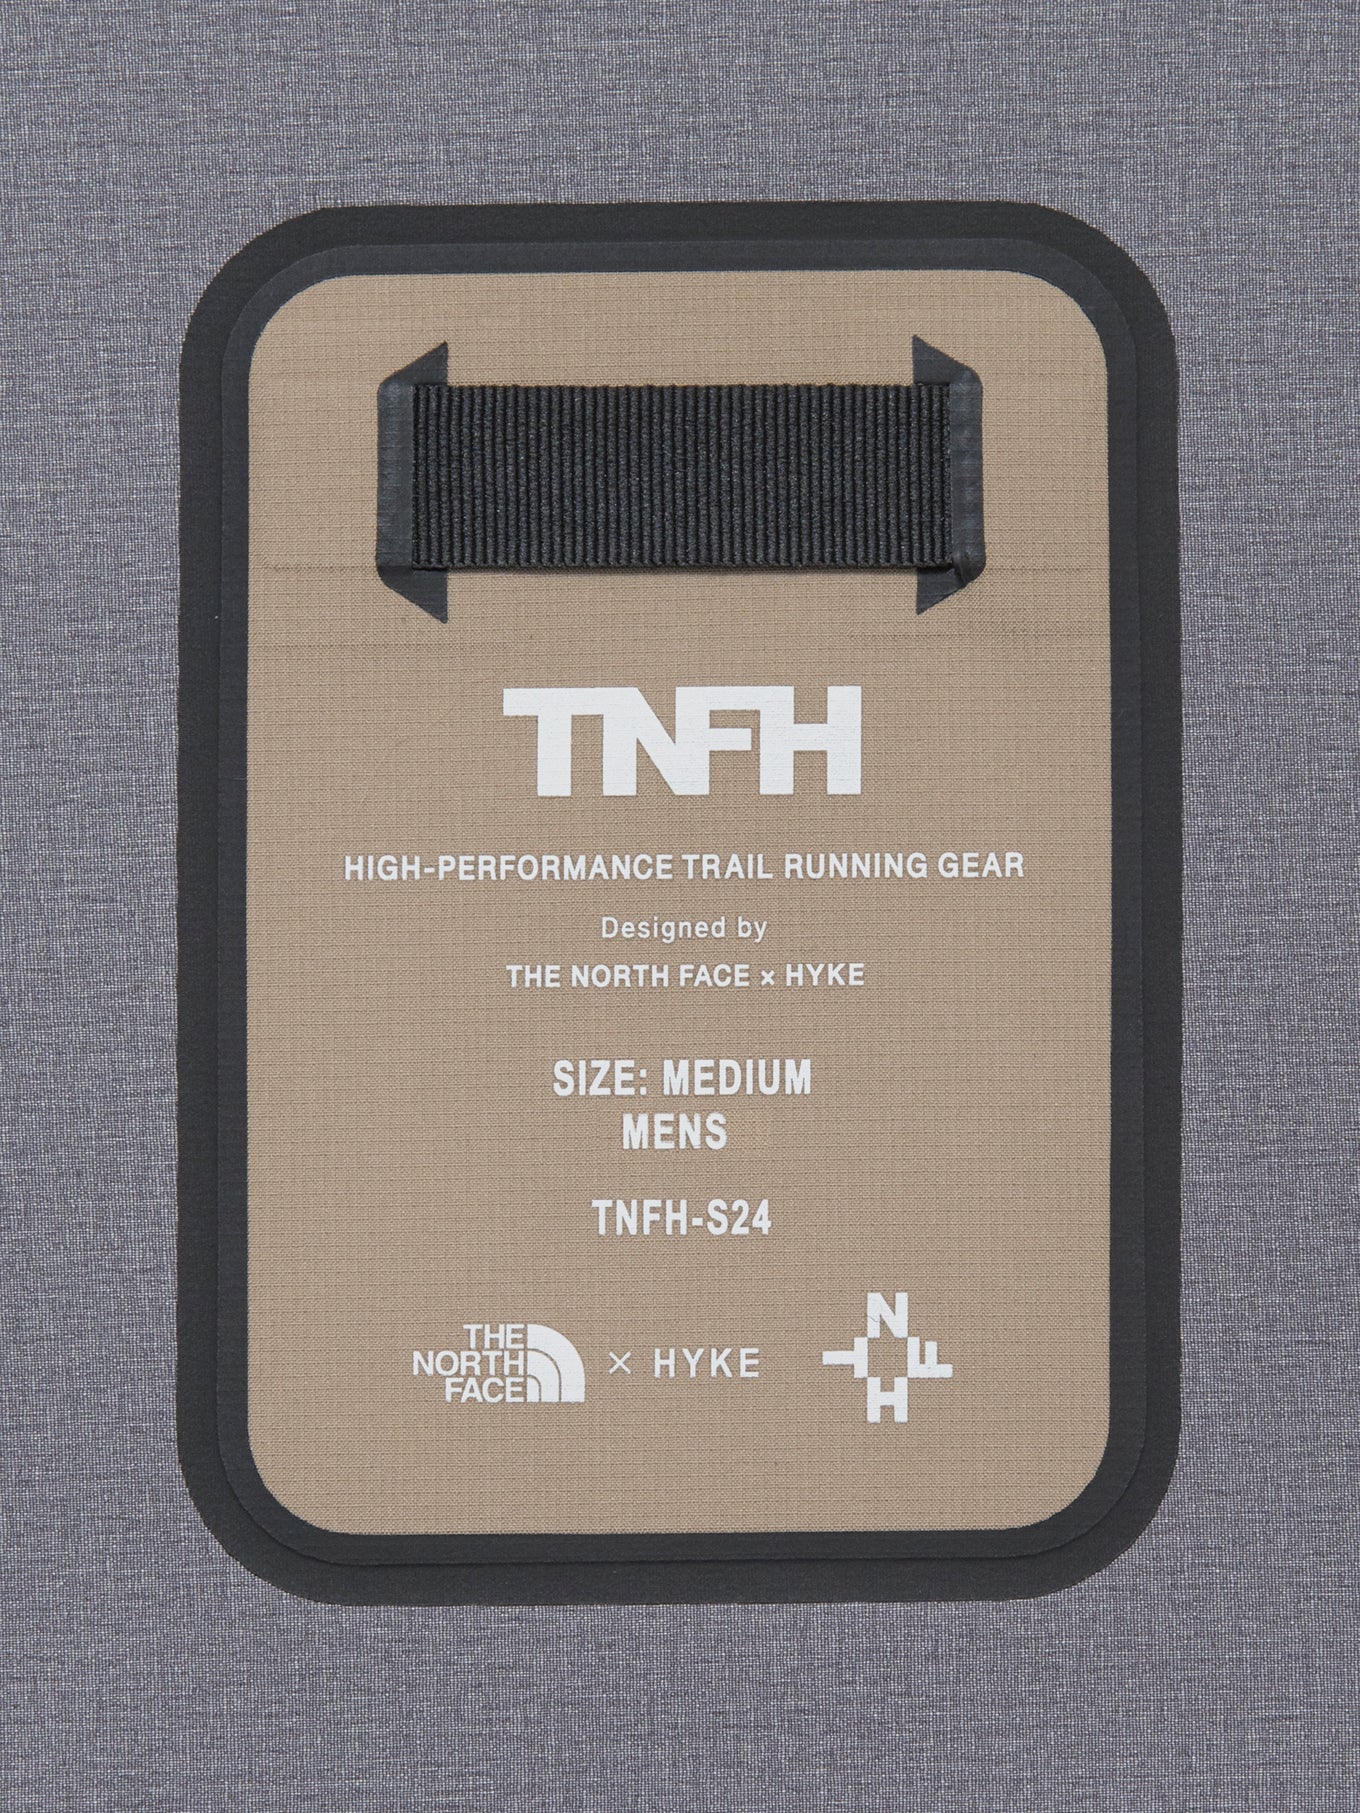 GTX Trail Long Jacket (Mens)<br>TNFH  THE NORTH FACE × HYKE